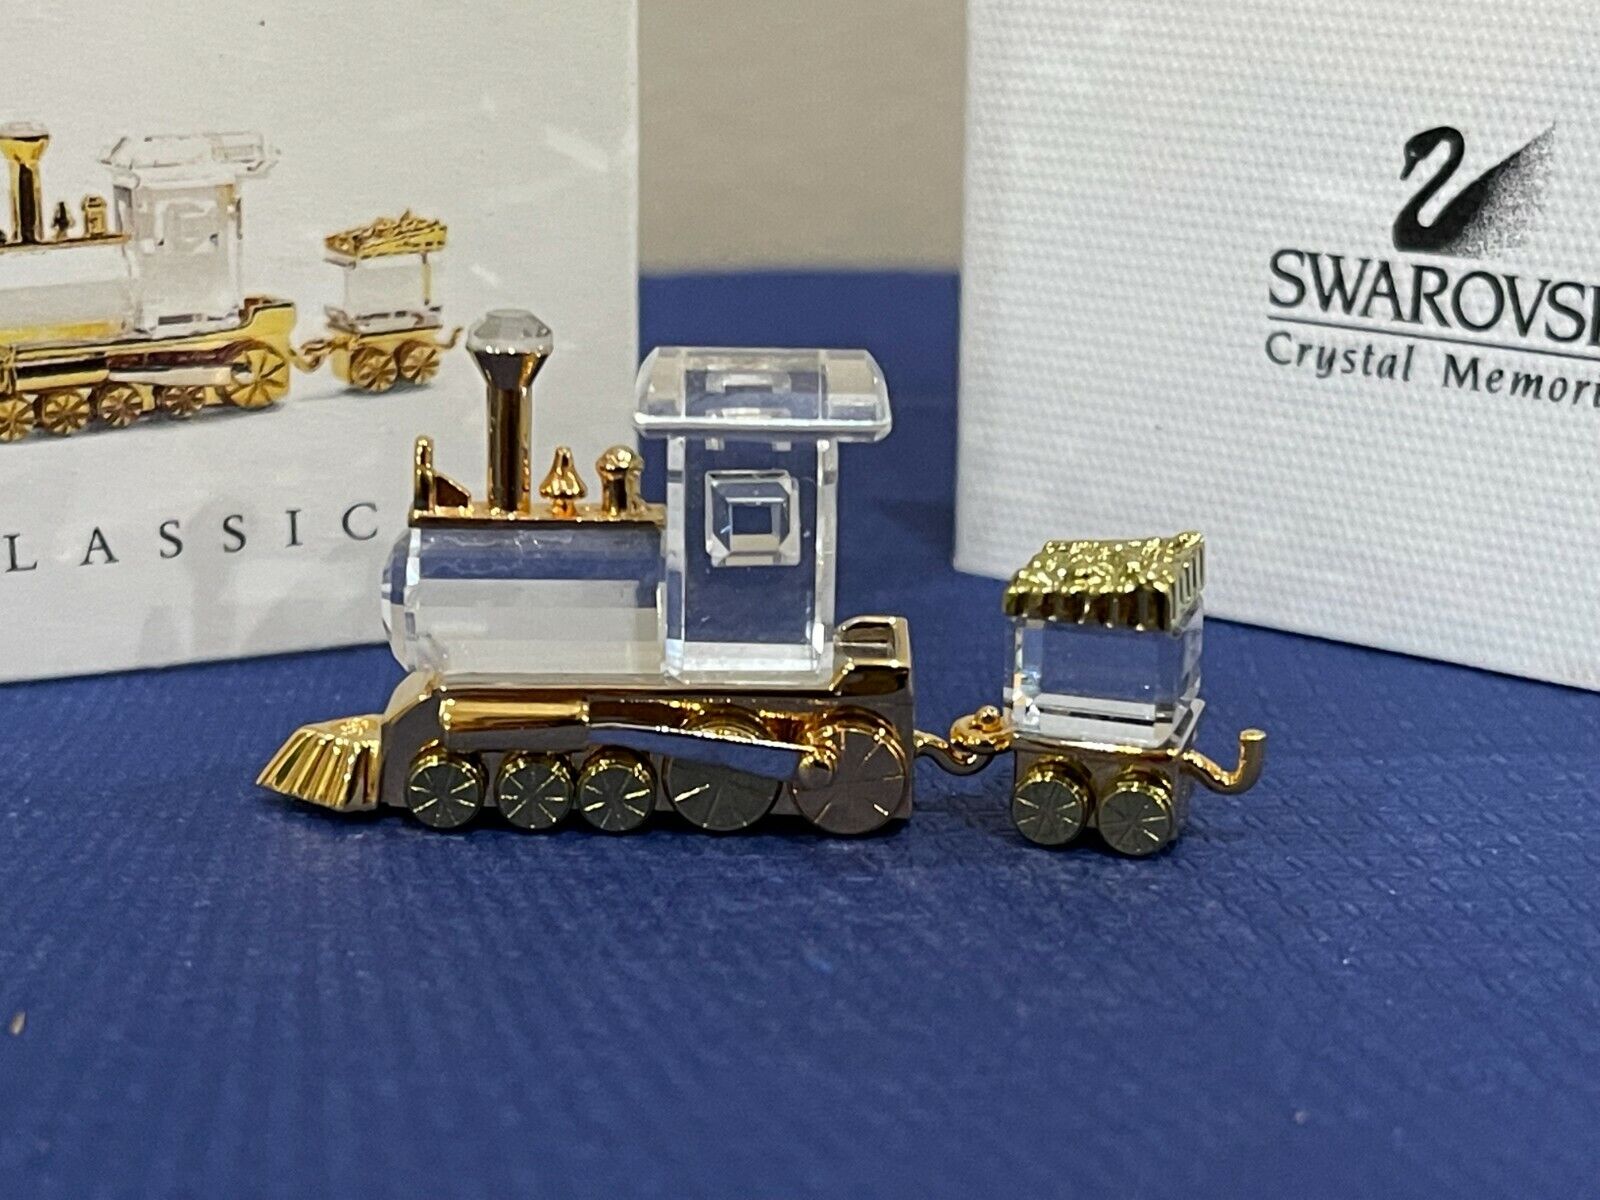 Swarovski Crystal Memories Classics Toy Train 209454 Figurine Retired Locomotive